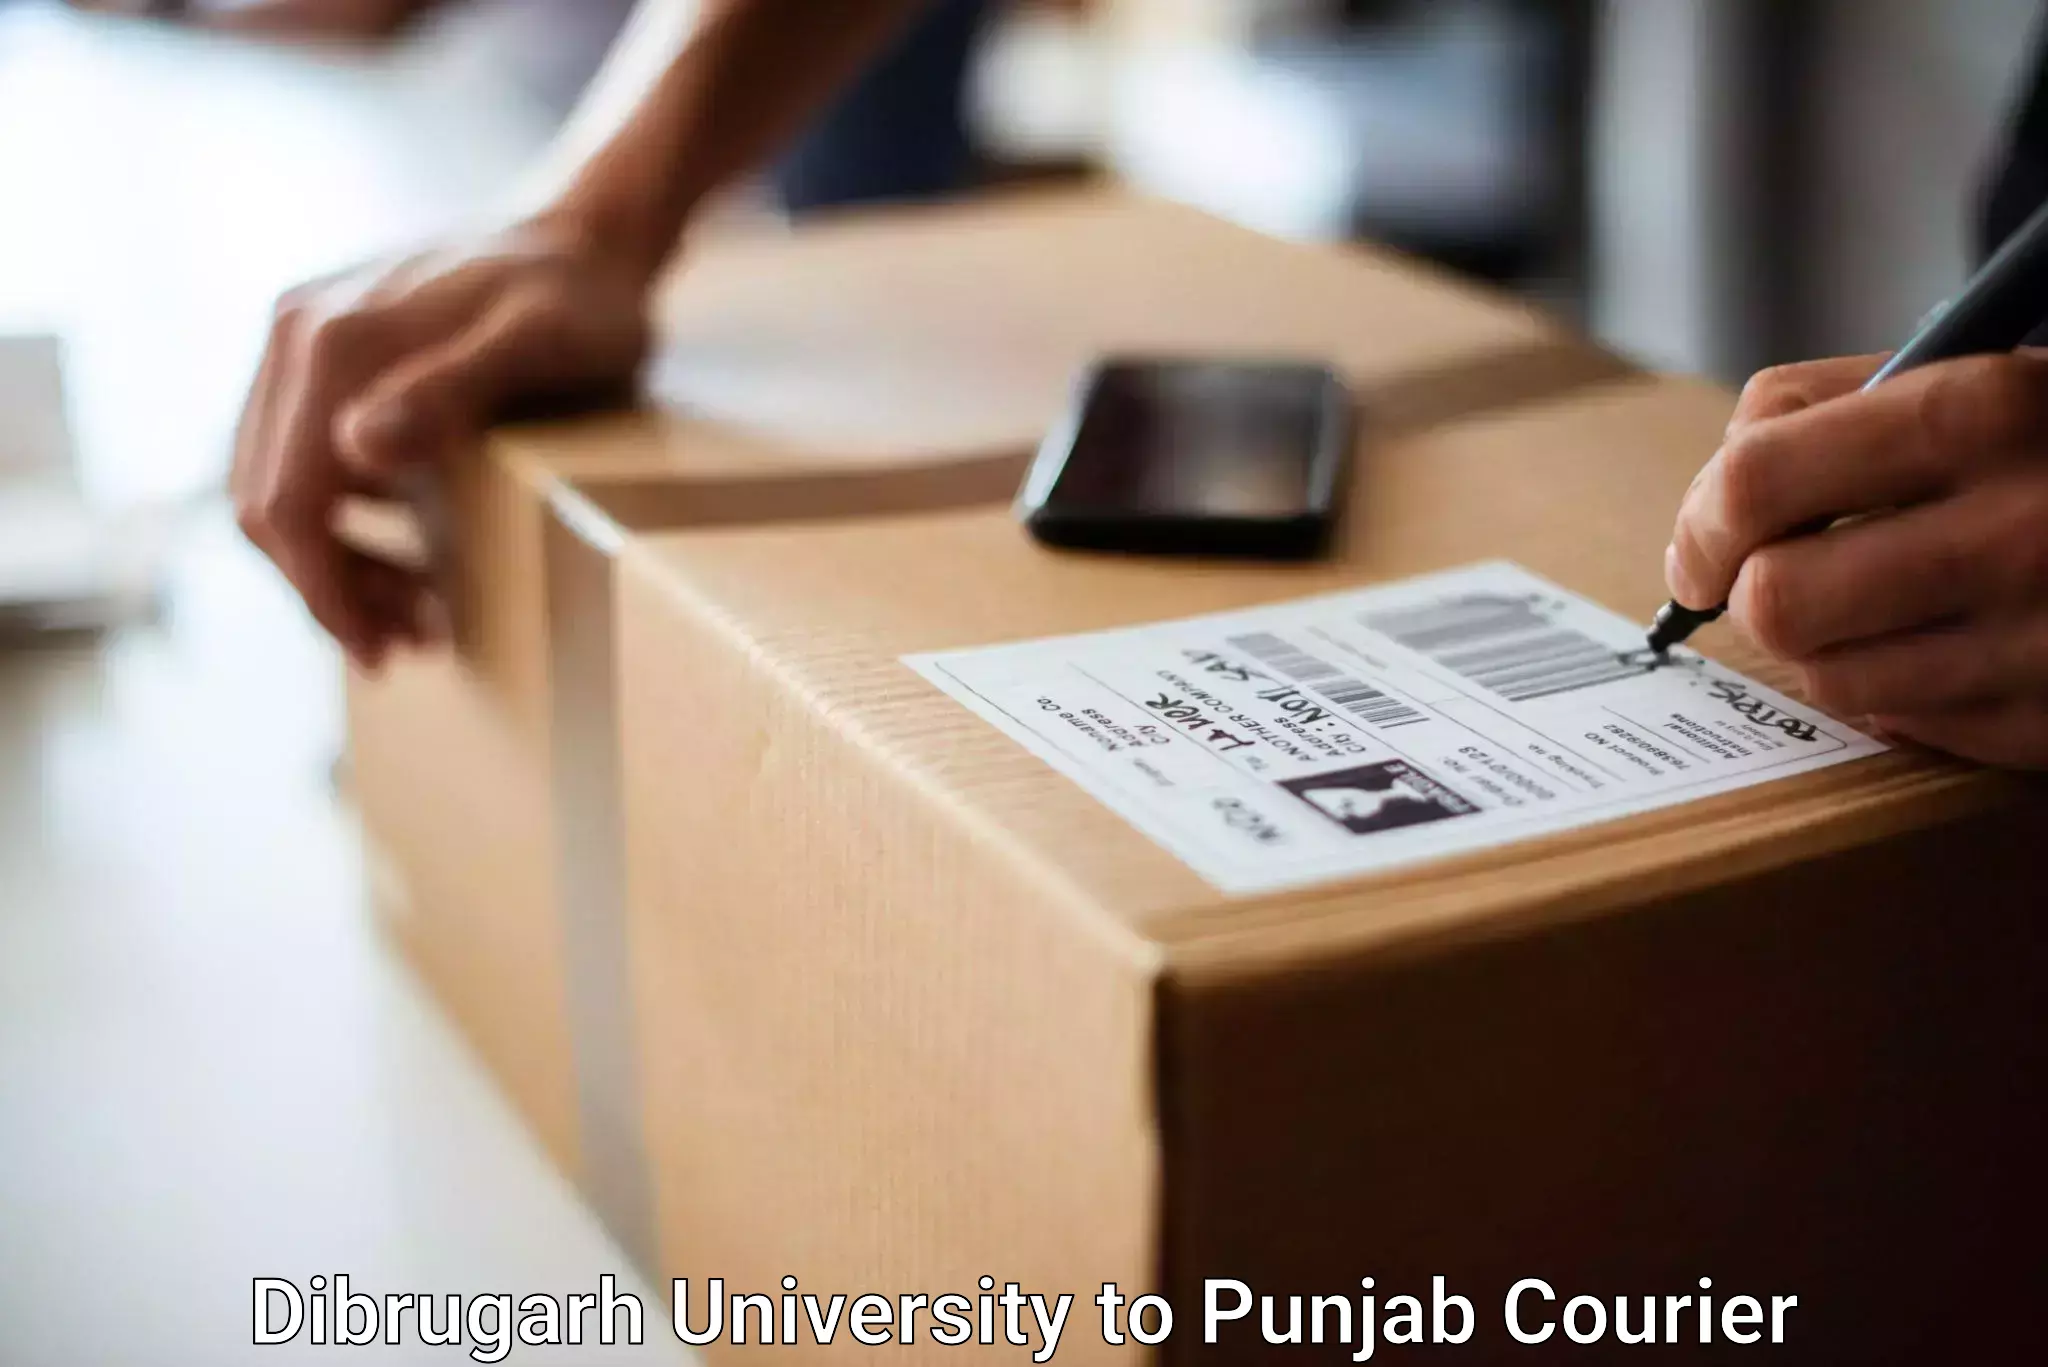 Baggage shipping experts Dibrugarh University to Amritsar